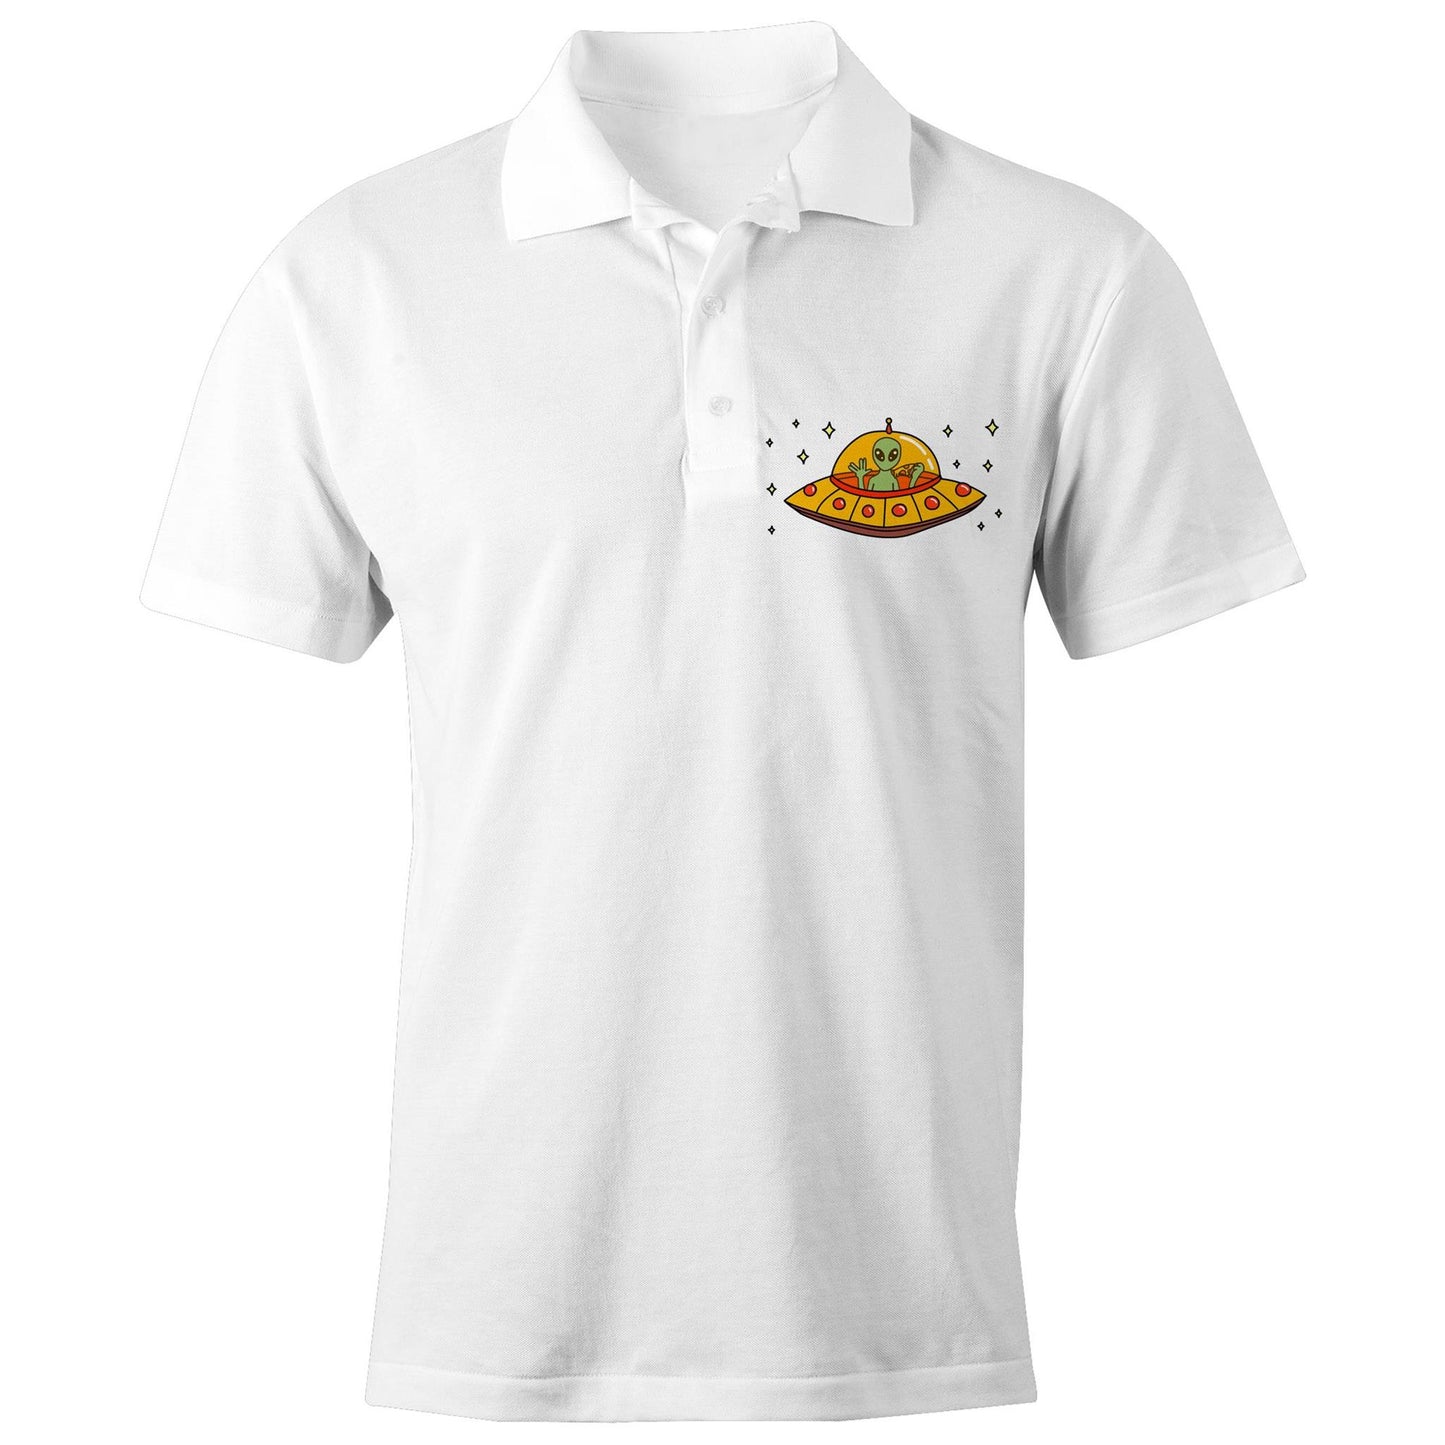 Alien Pizza - Chad S/S Polo Shirt, Printed White Polo Shirt Food Sci Fi